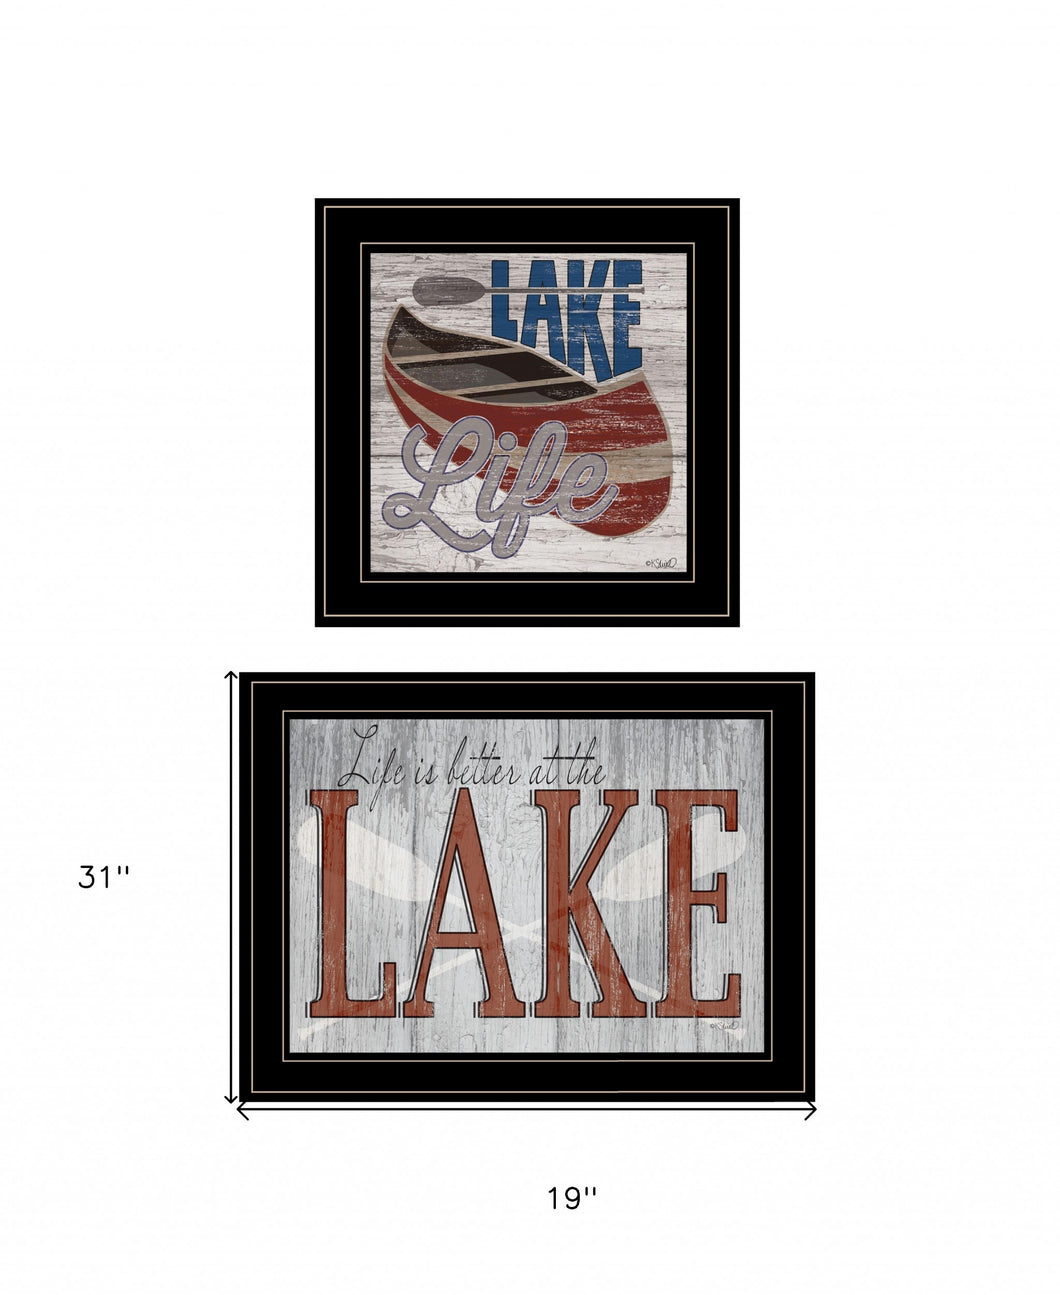 Set Of Two Lake Life Is Better 2 Black Framed Print Wall Art